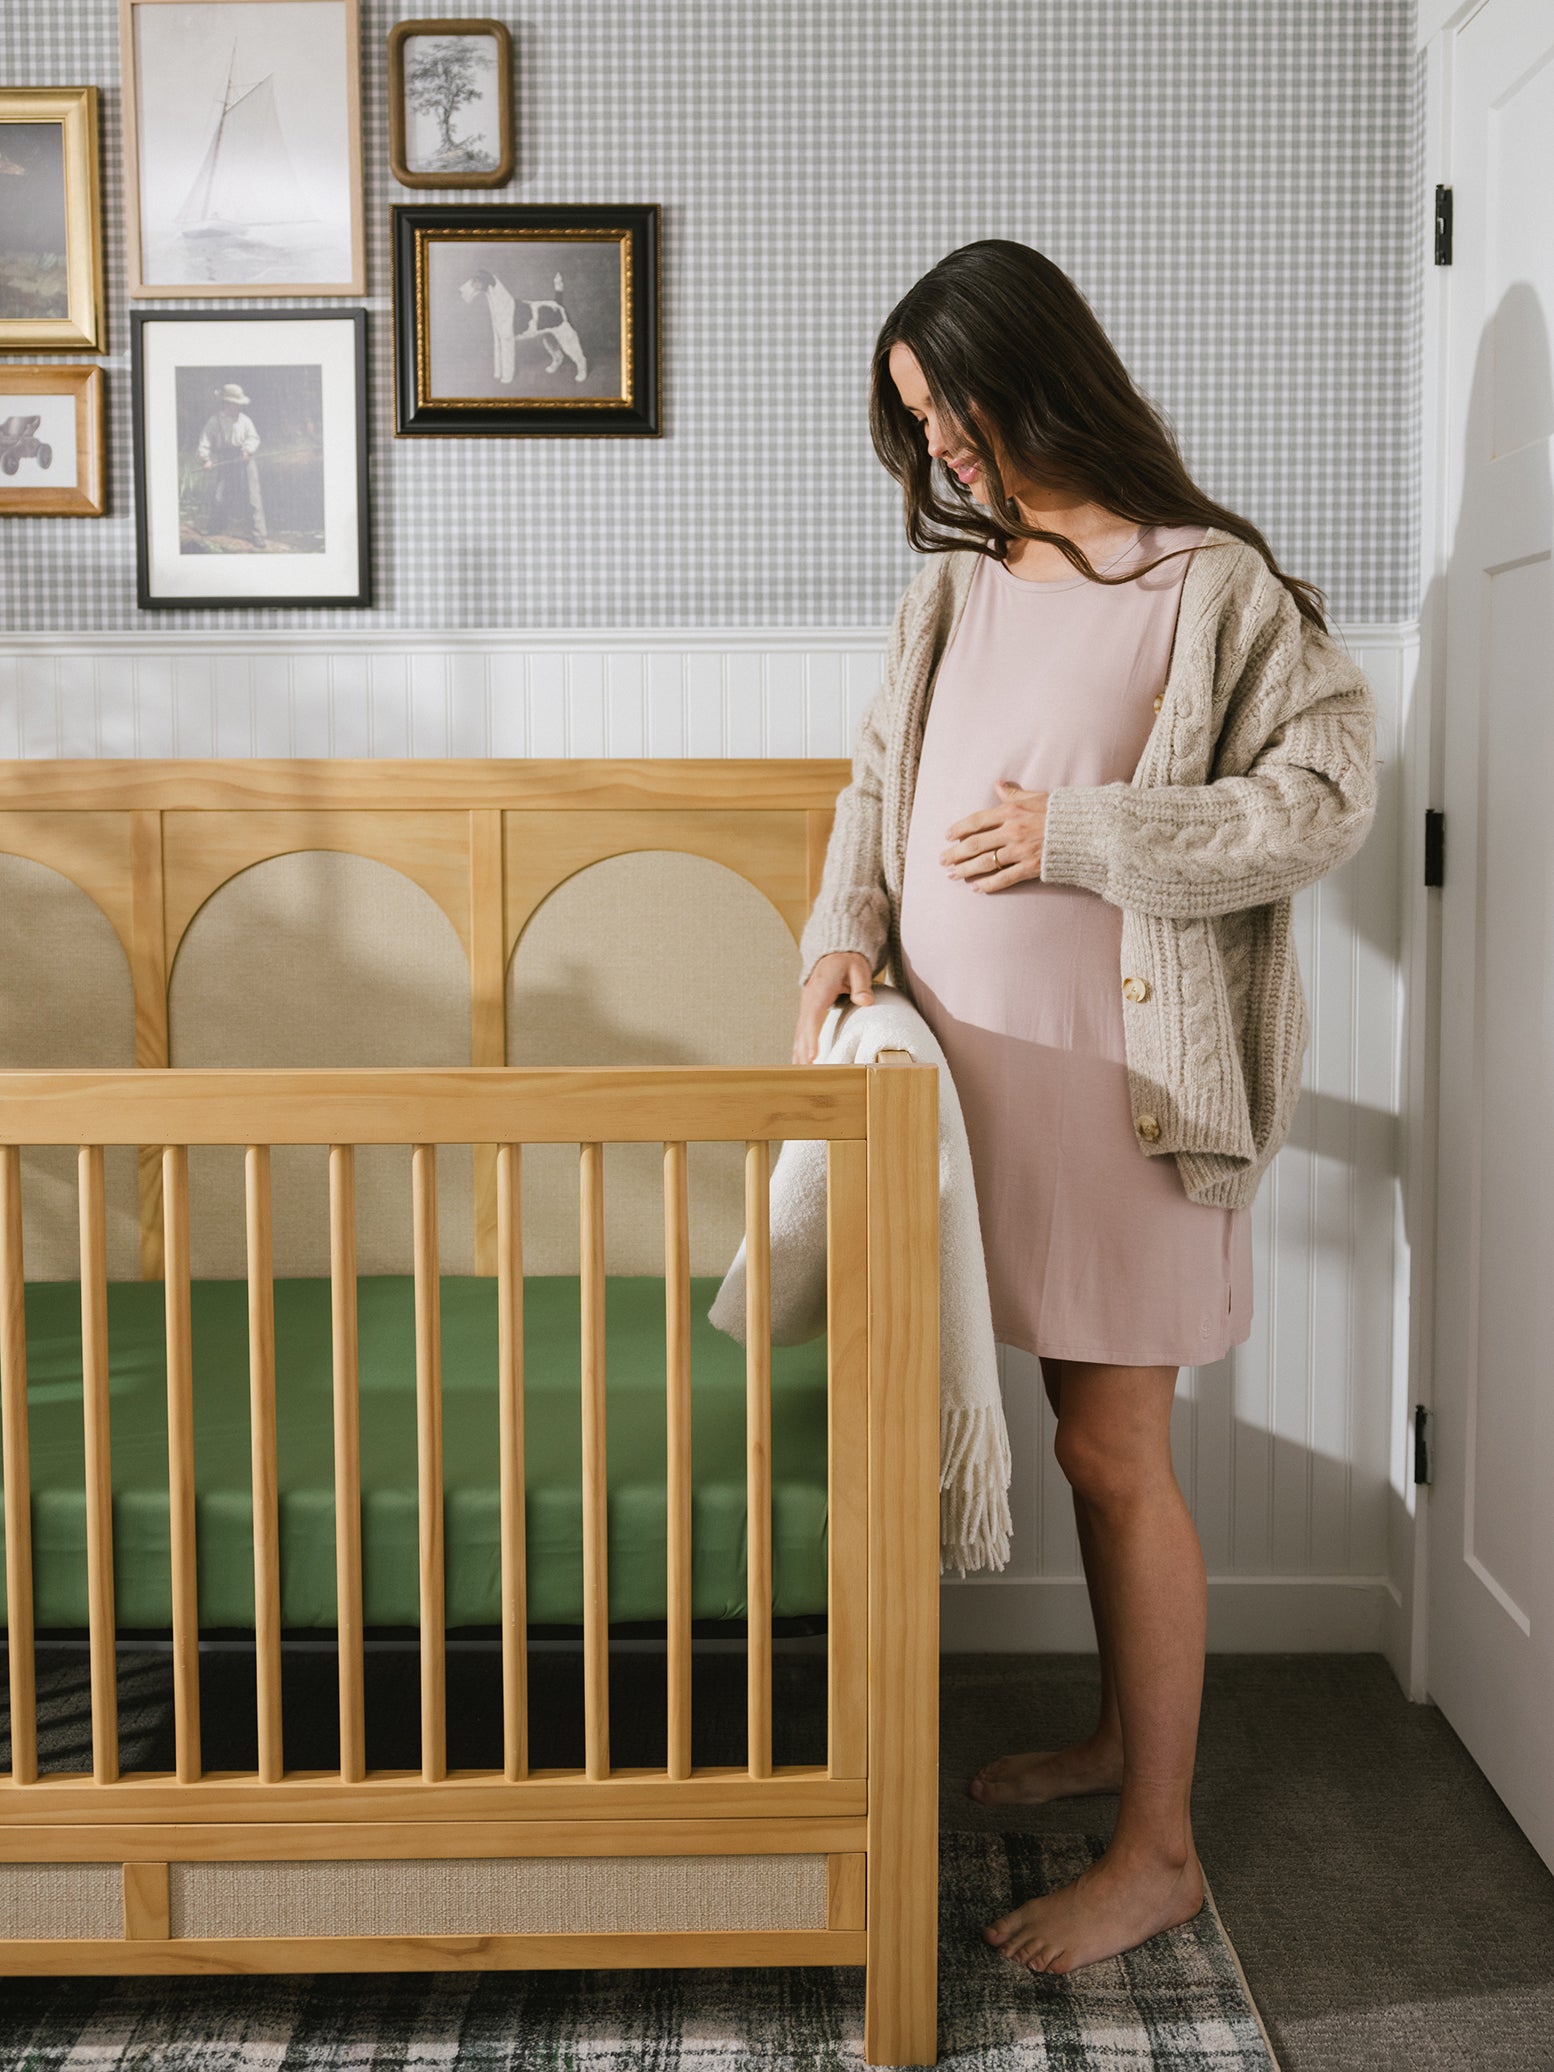 Fern Bamboo Crib Sheet in baby crib. A woman looks at the crib. 